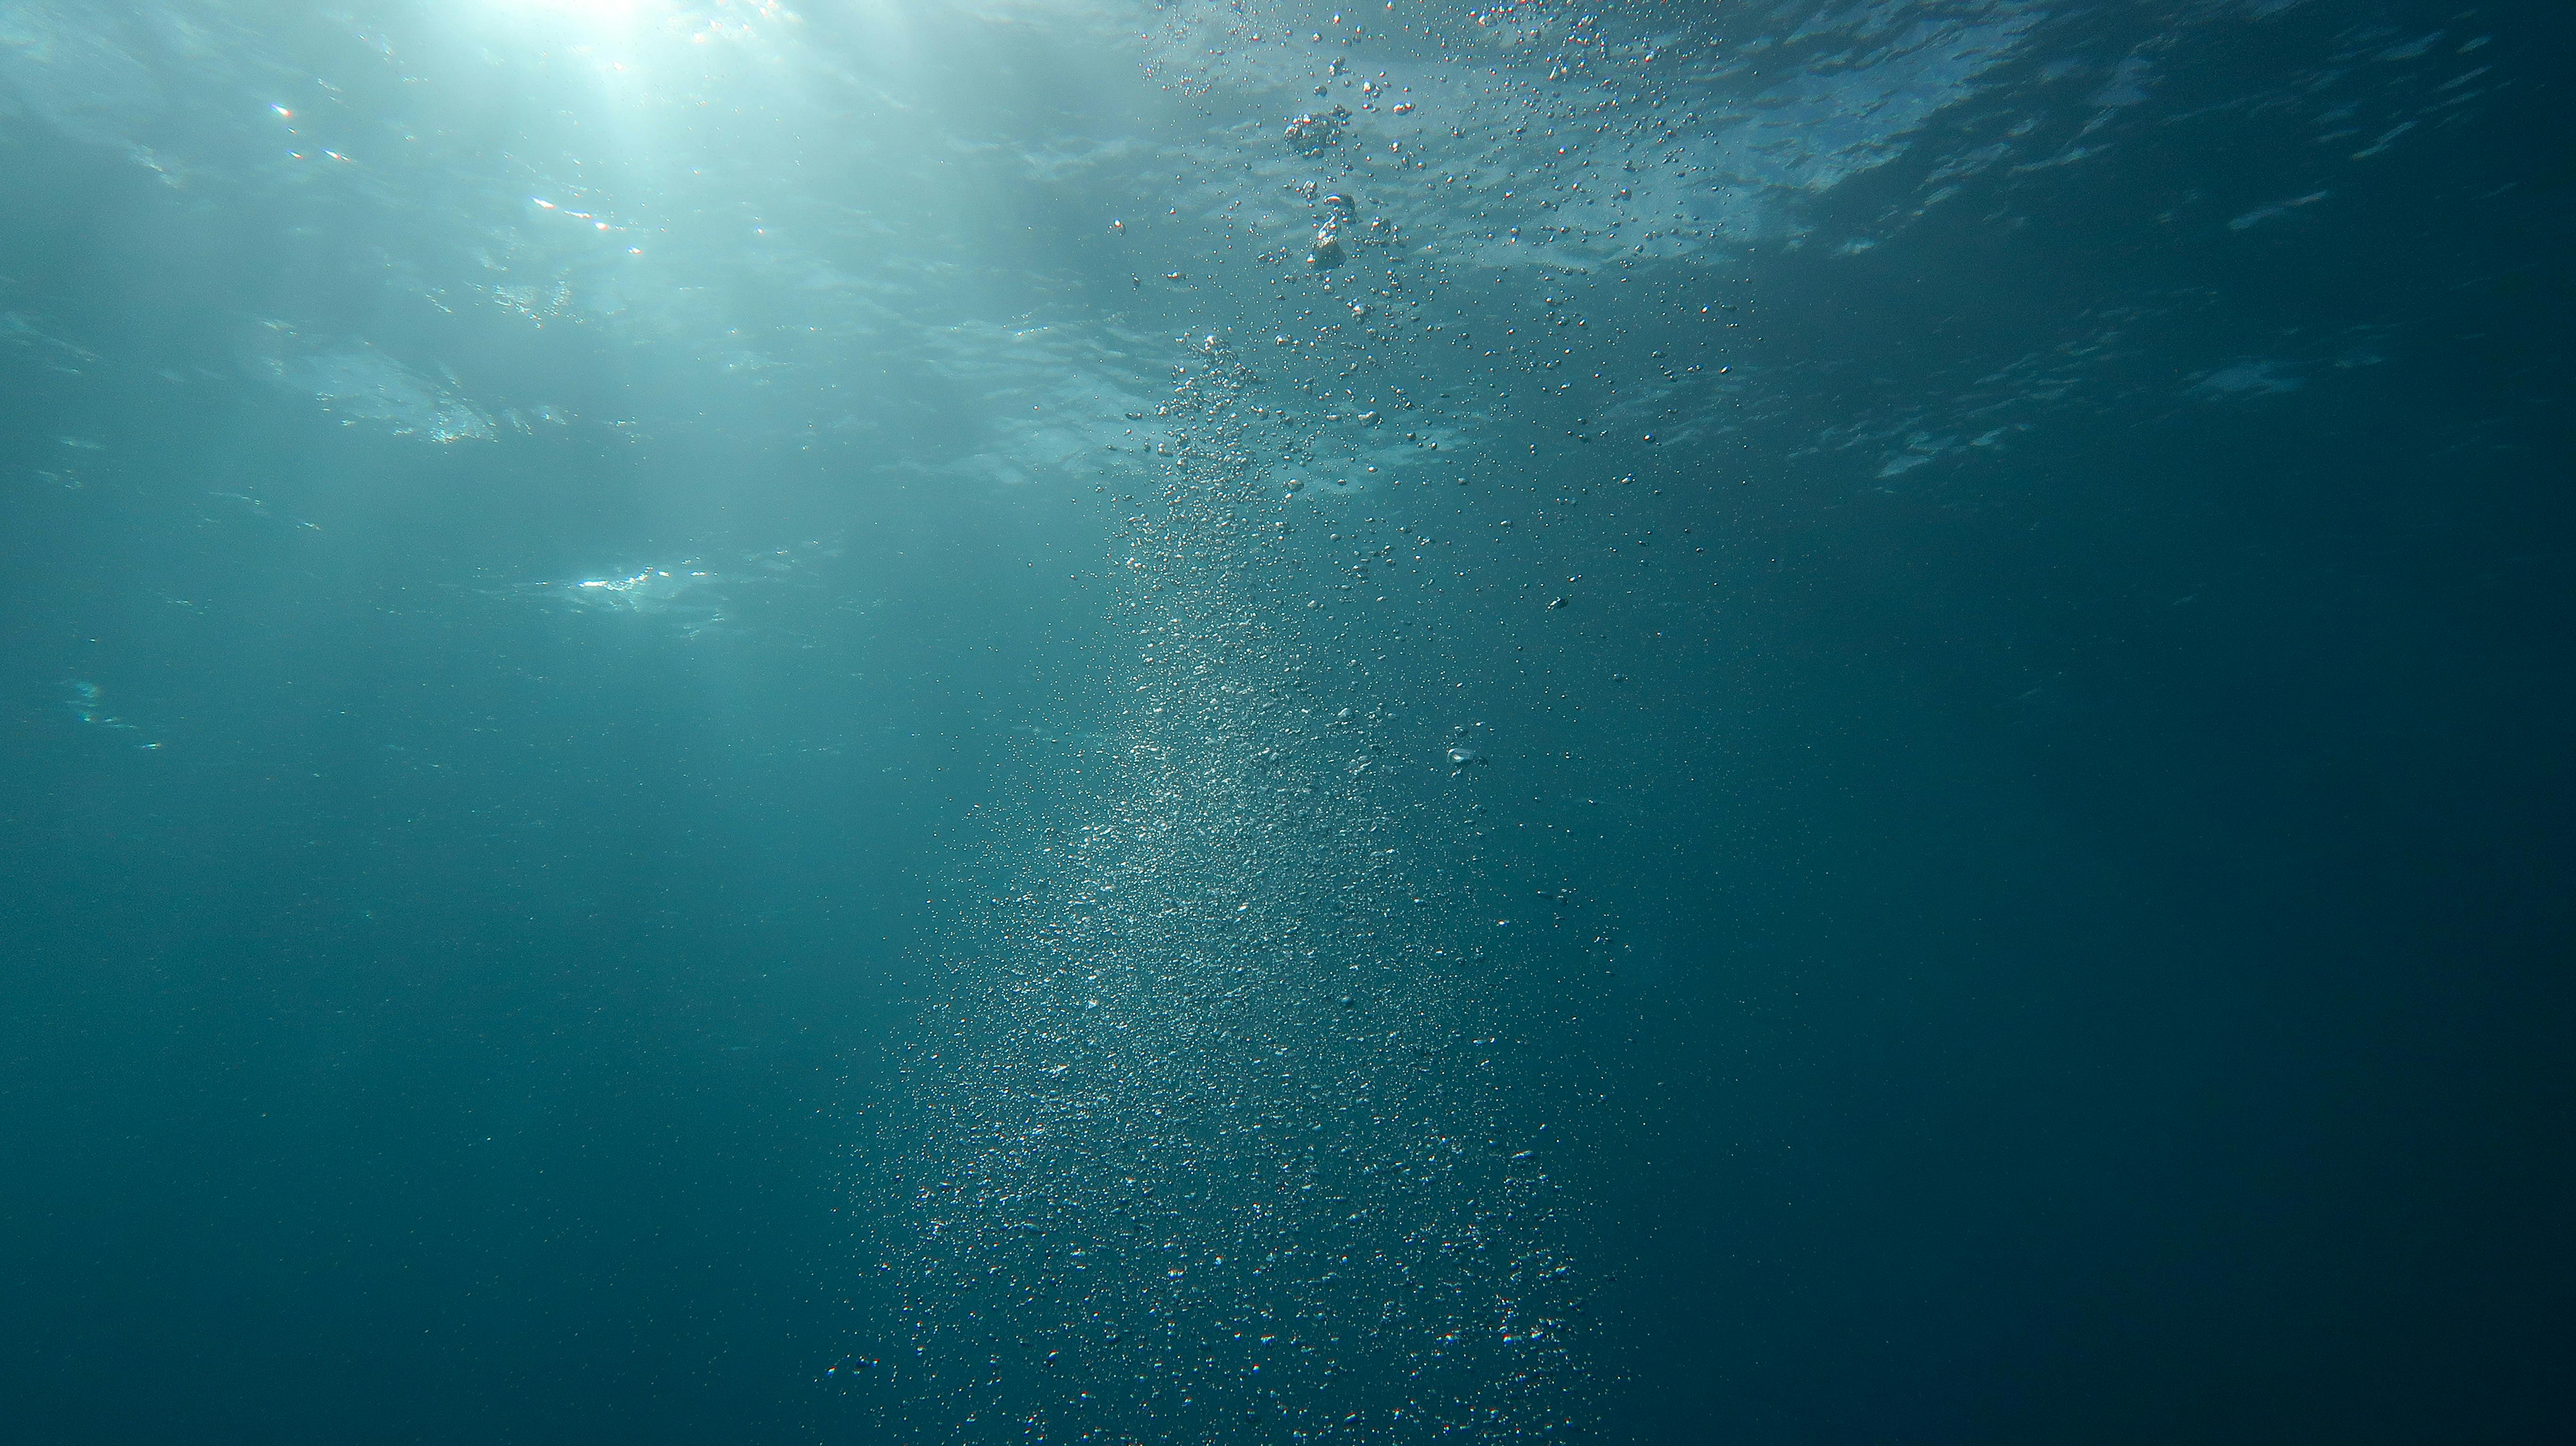 Ocean Bubbles Photos, Download The BEST Free Ocean Bubbles Stock Photos ...